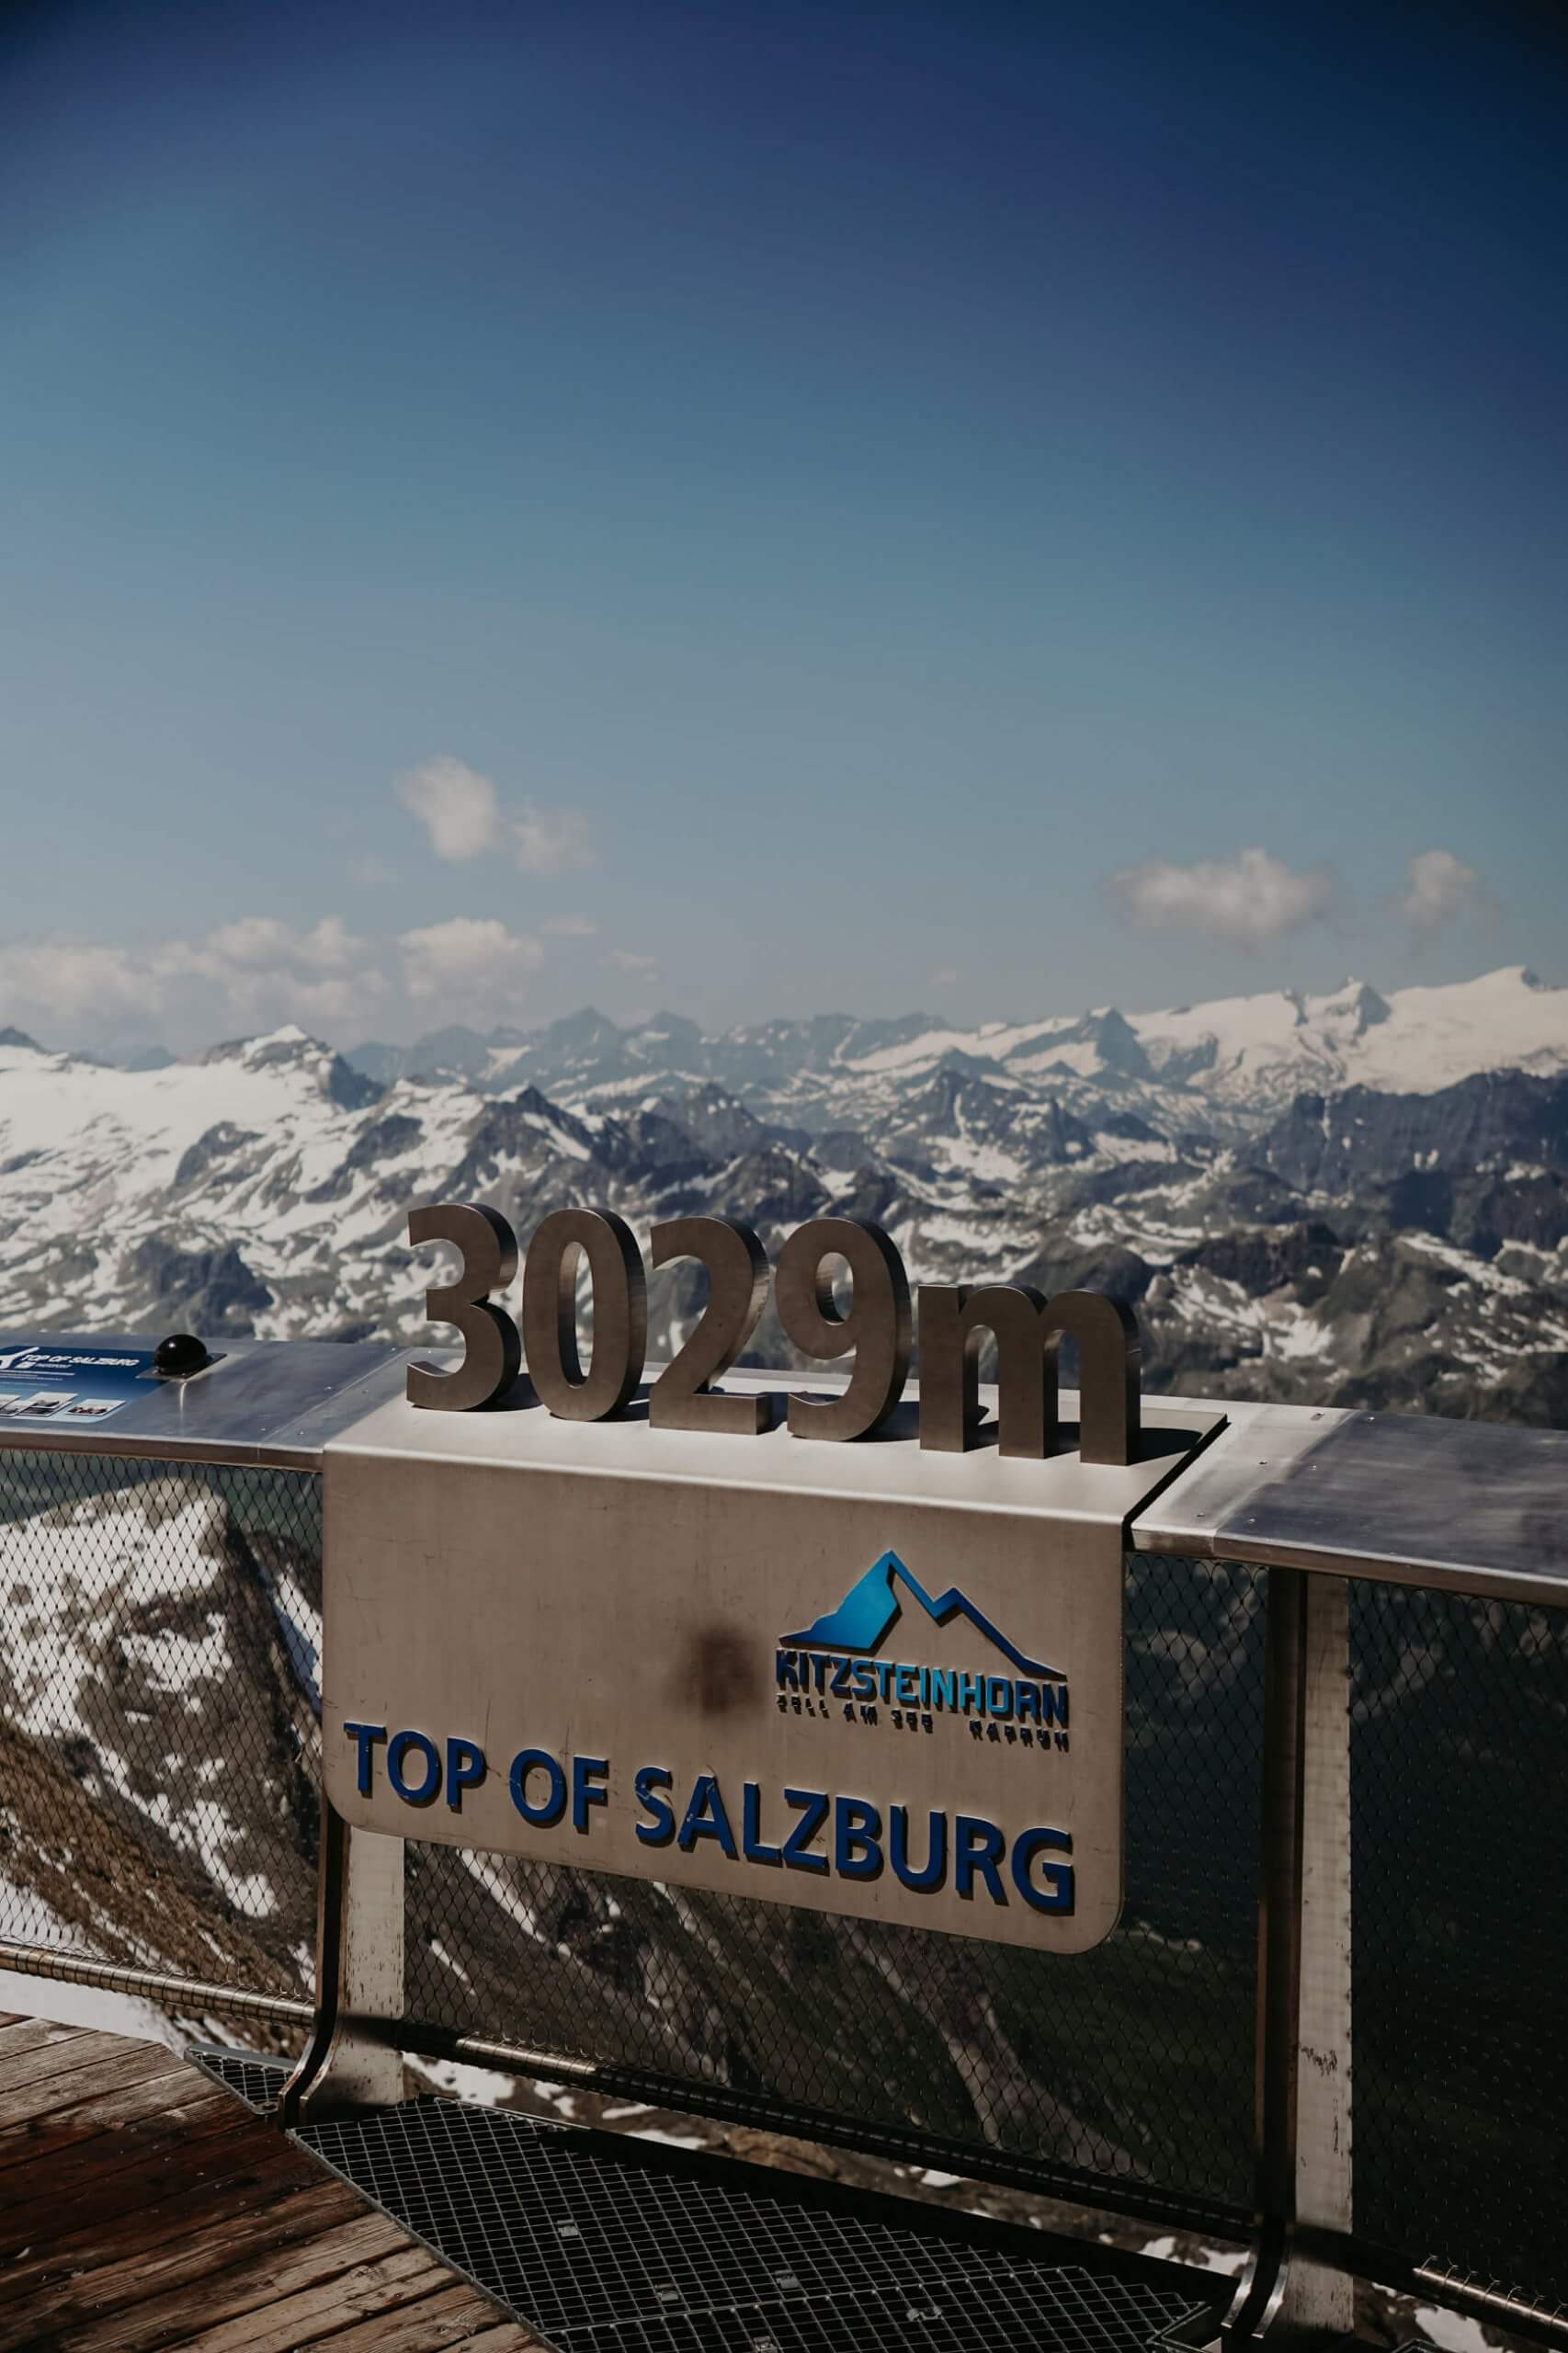 Top of Salzburg - Kitzsteinhorn